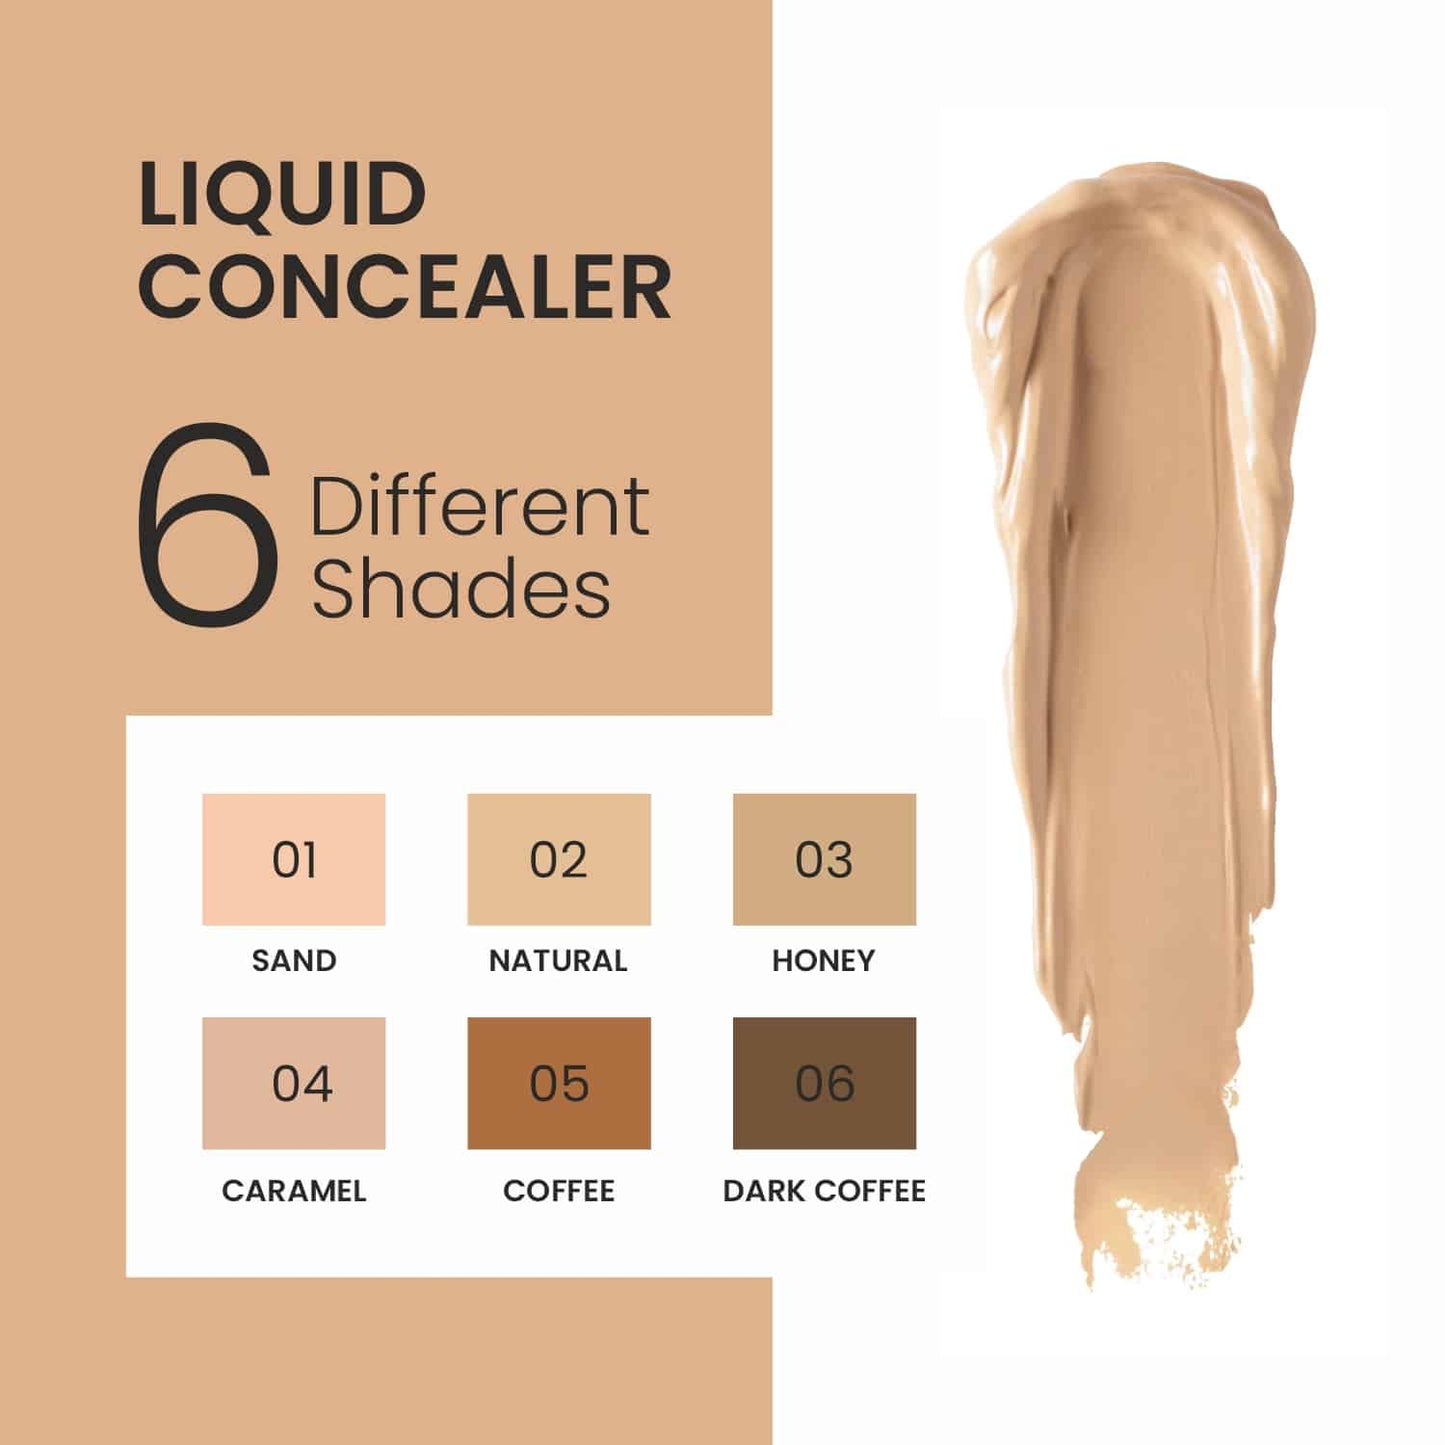 Liquid Concealer - 06 Dark Coffee